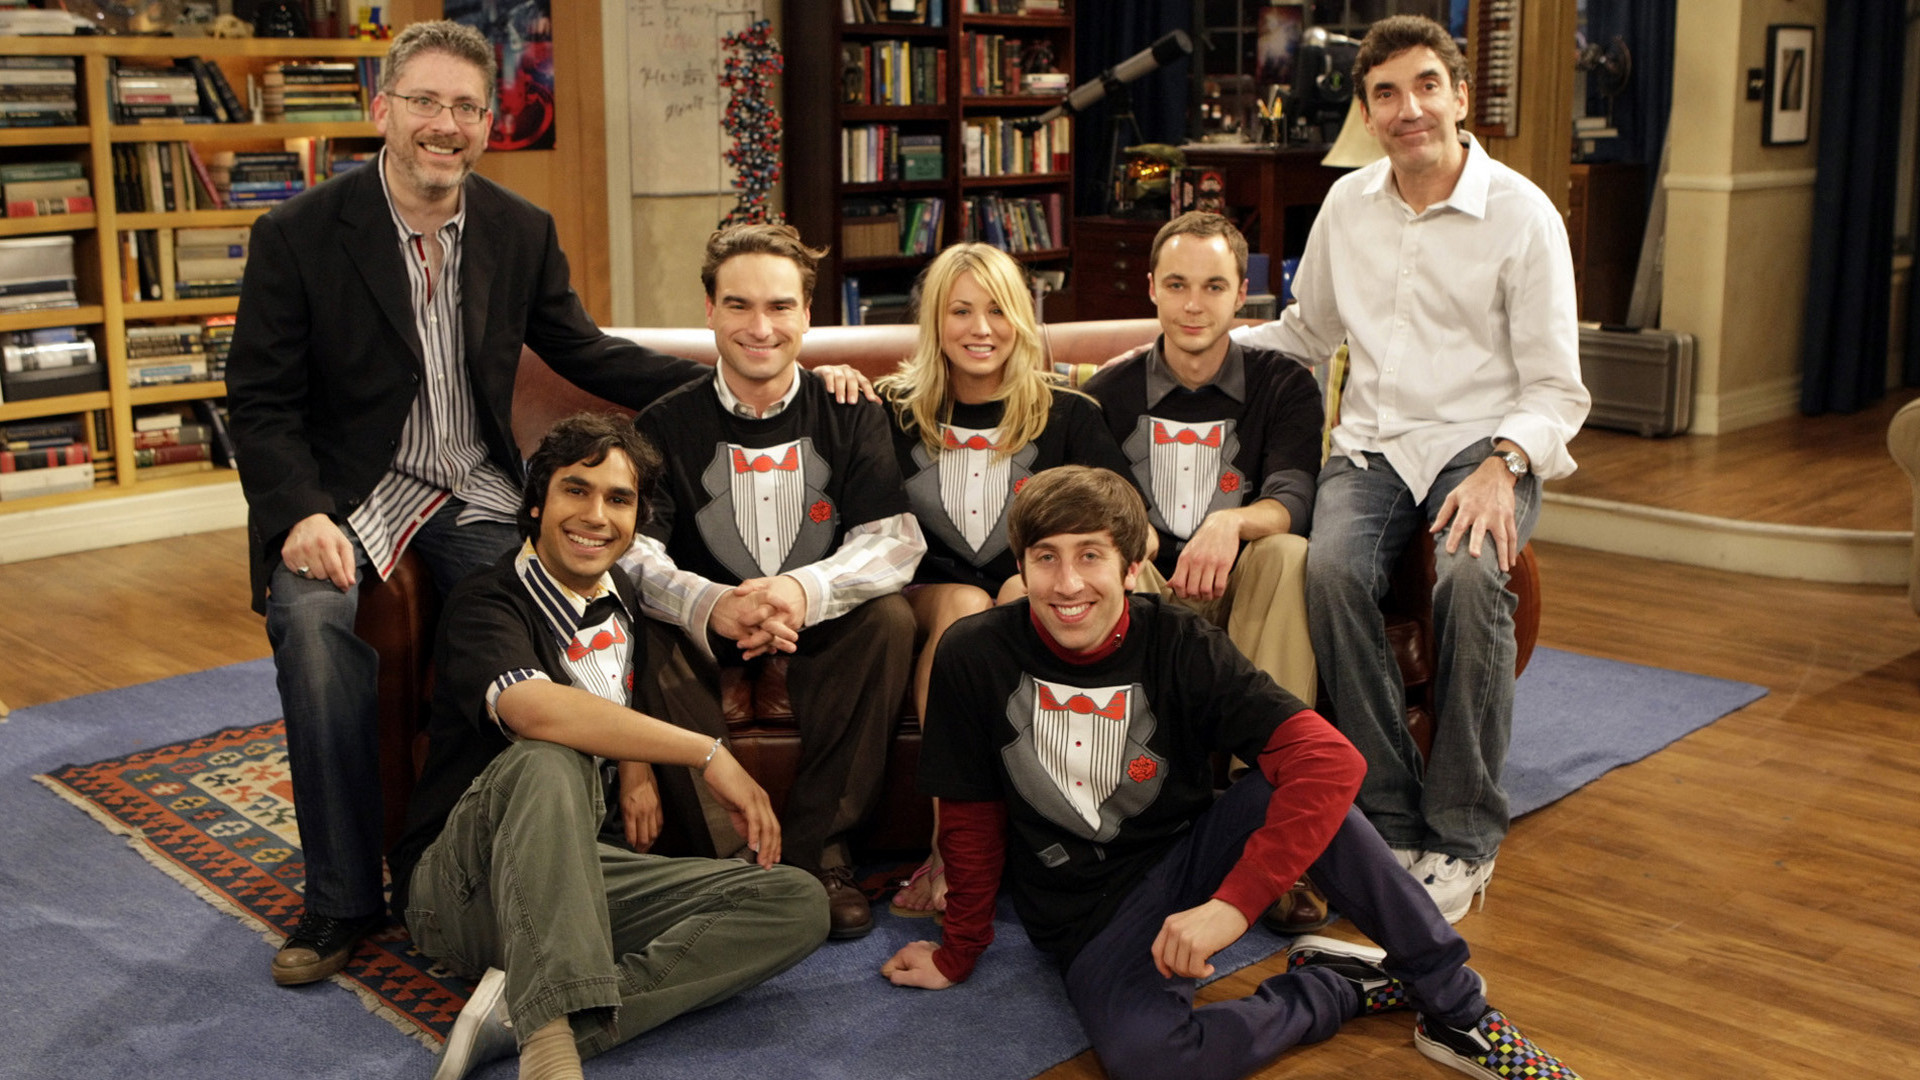 TV Show The Big Bang Theory HD Wallpaper | Background Image